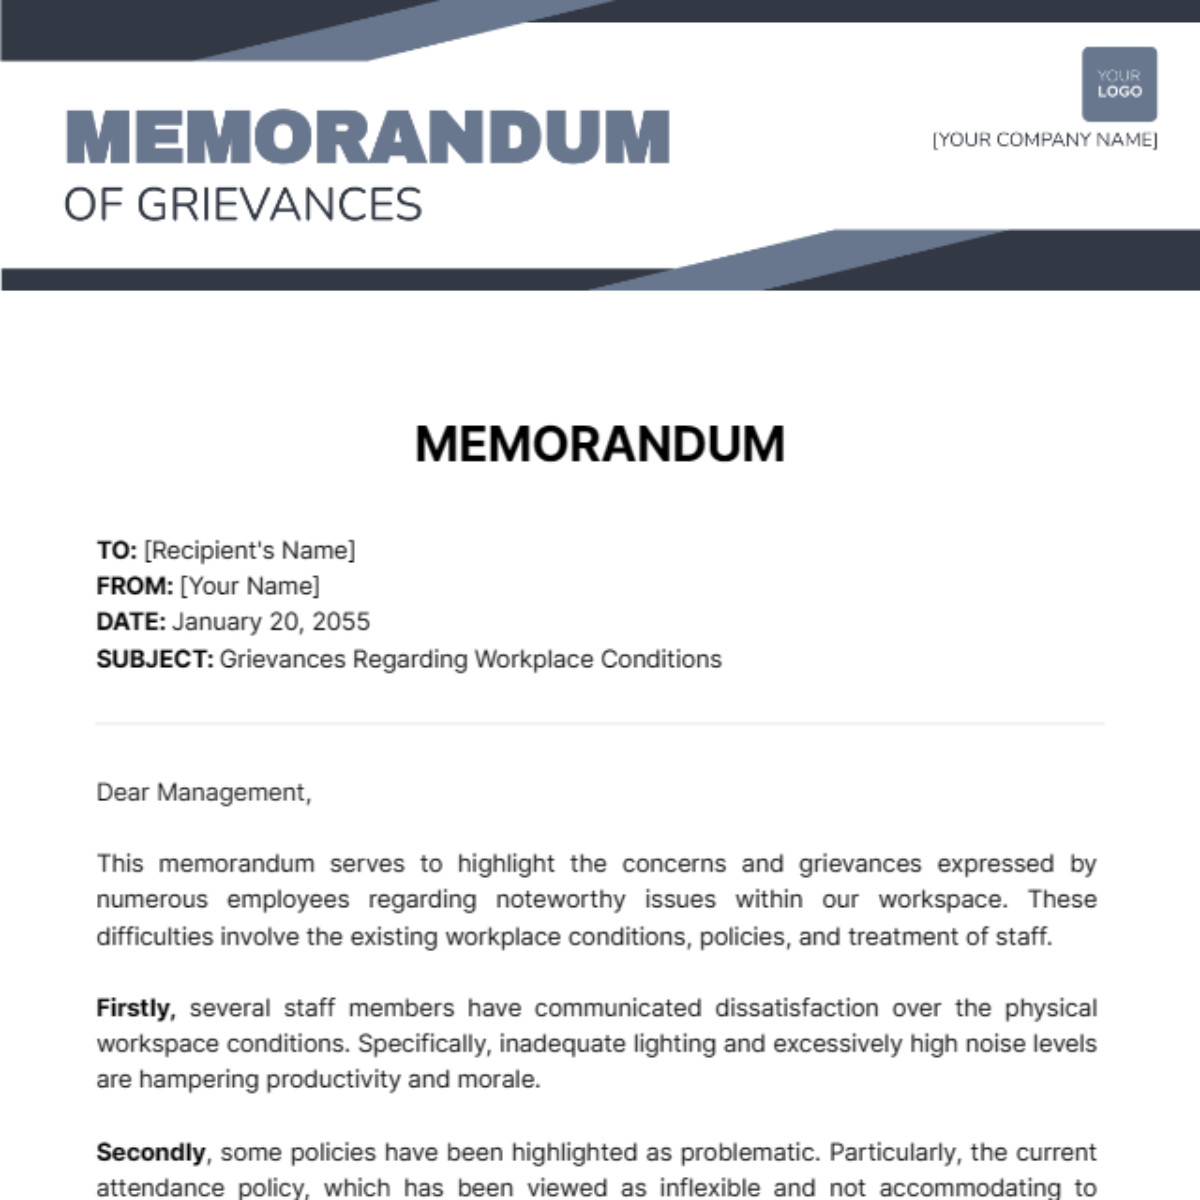 Free Memorandum of Grievances